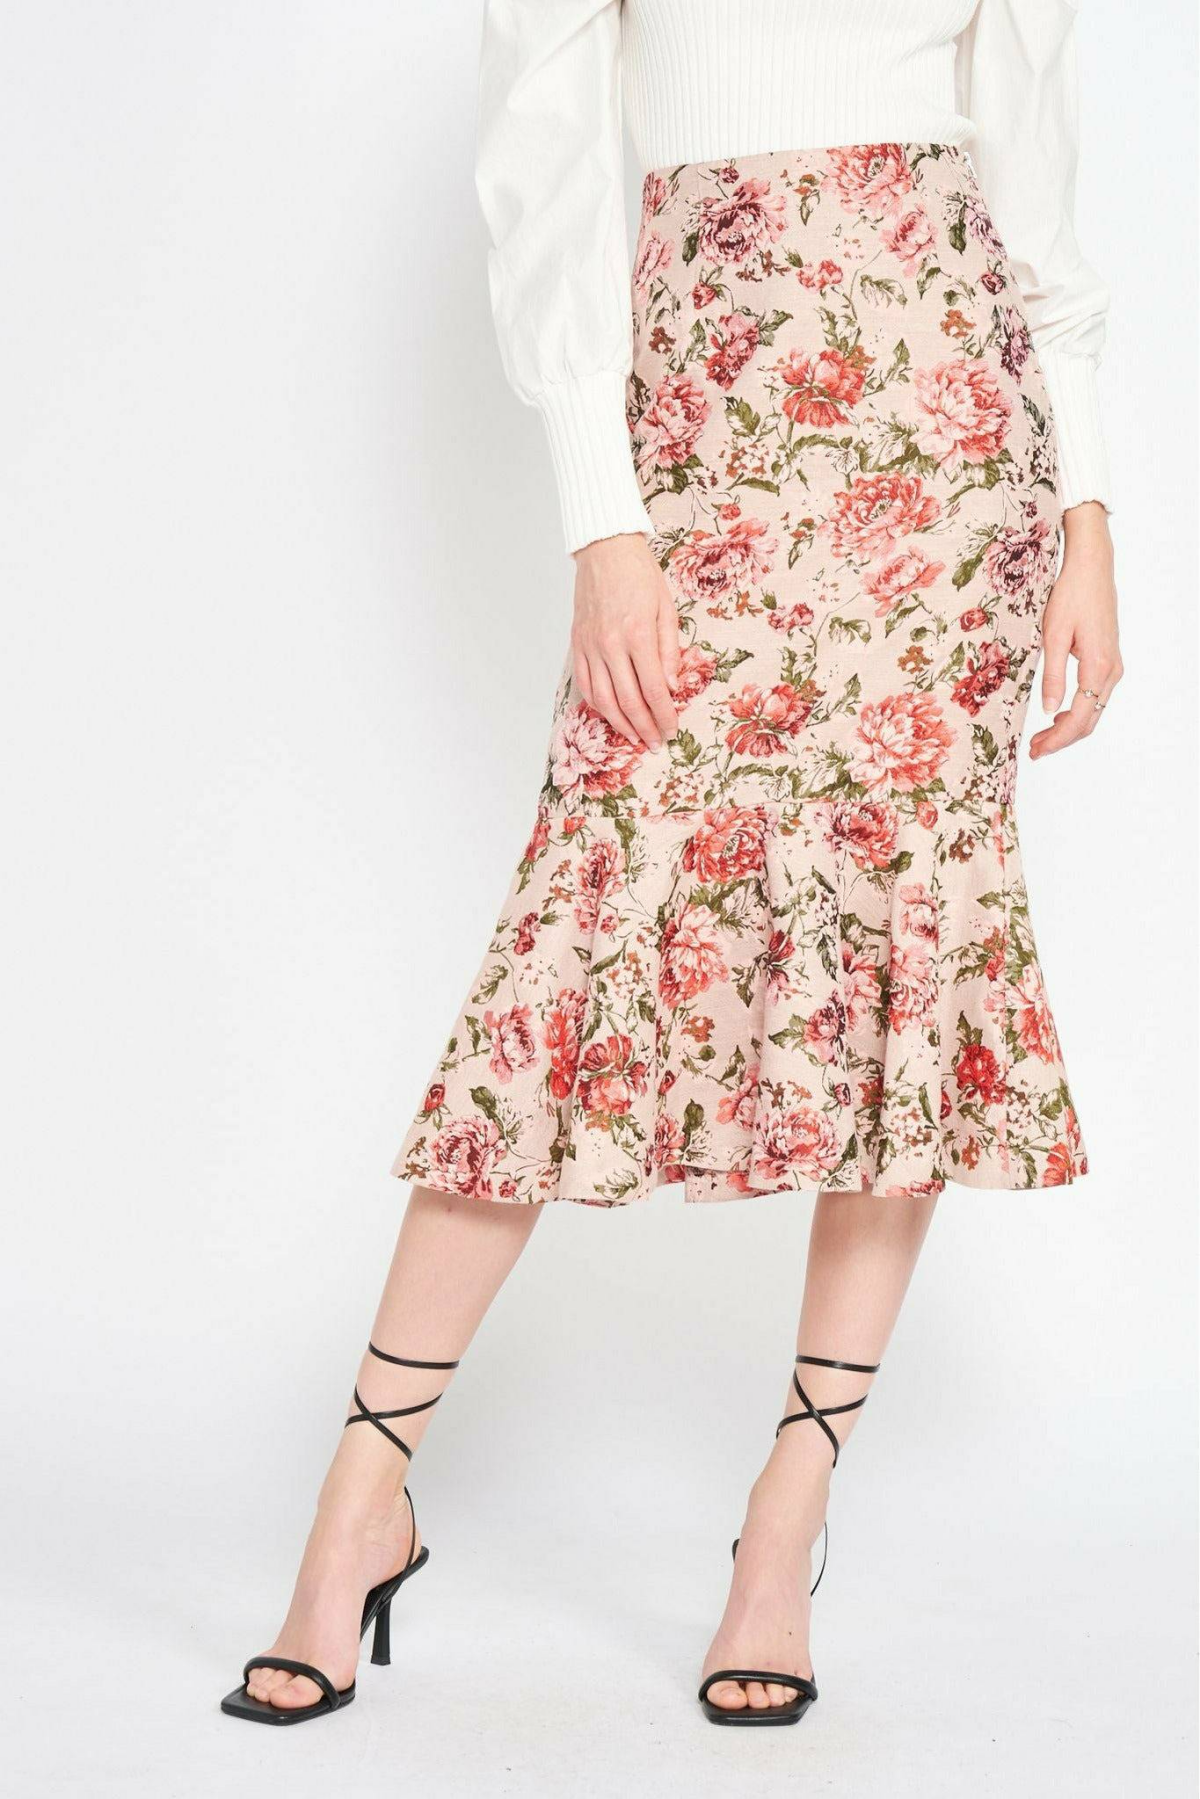 skirt styles floral trumpet skirt